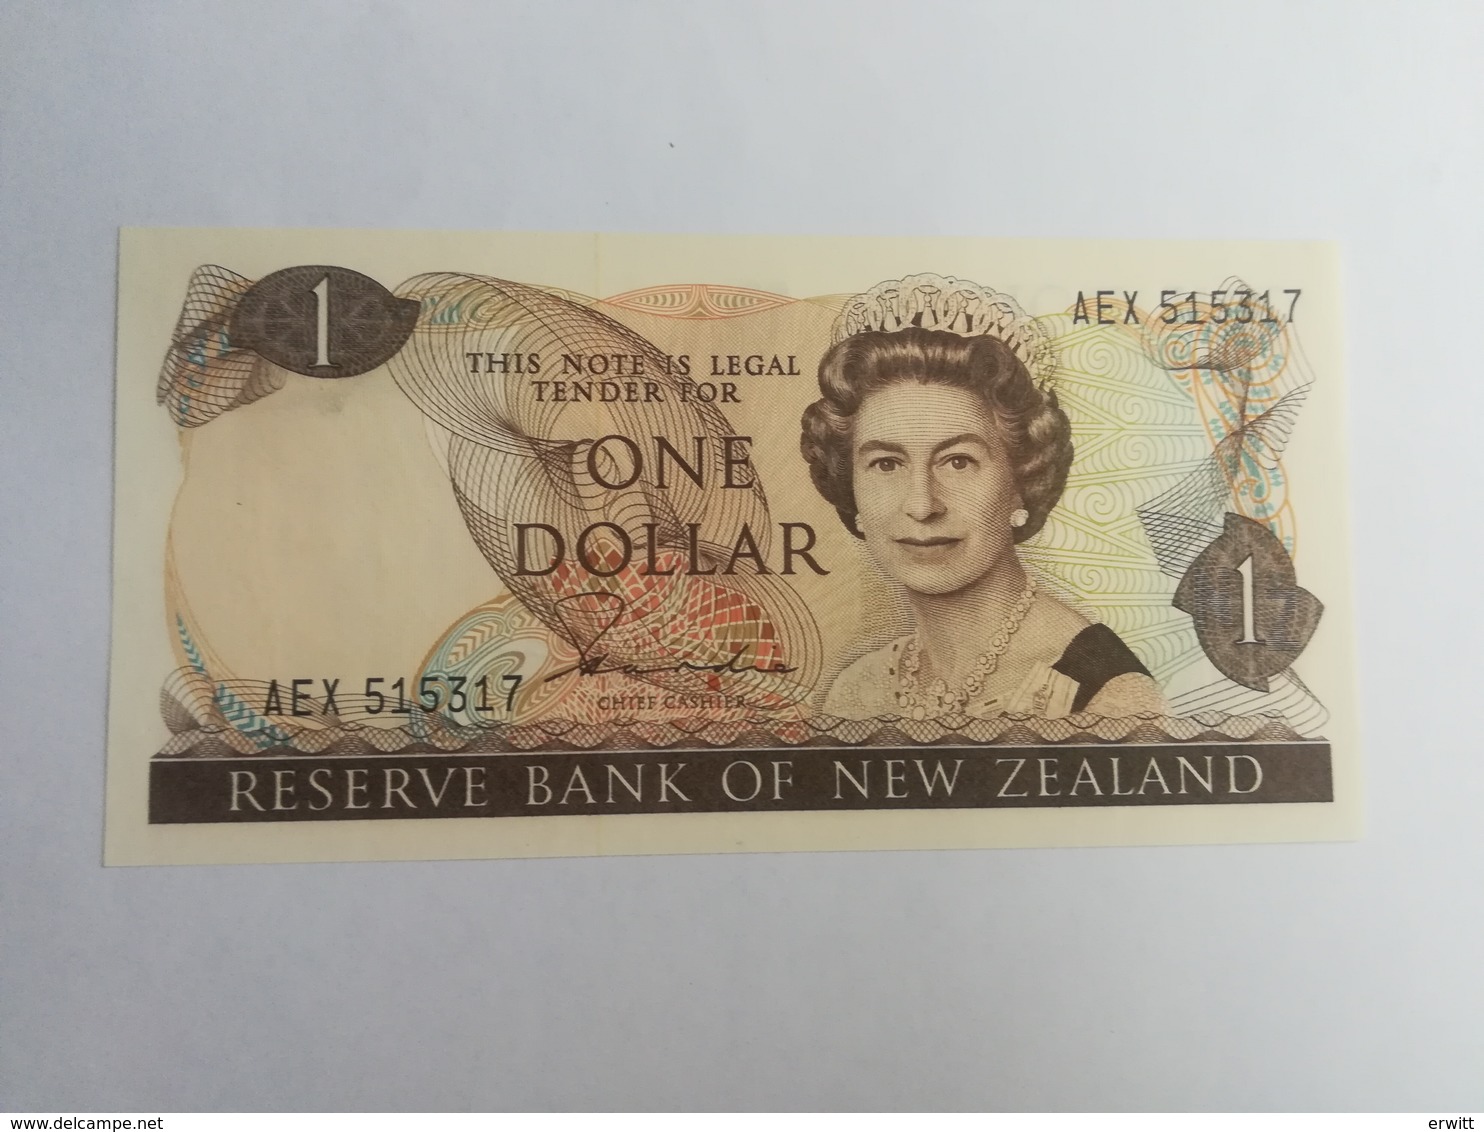 NUOVA ZELANDA 1 DOLLAR - New Zealand